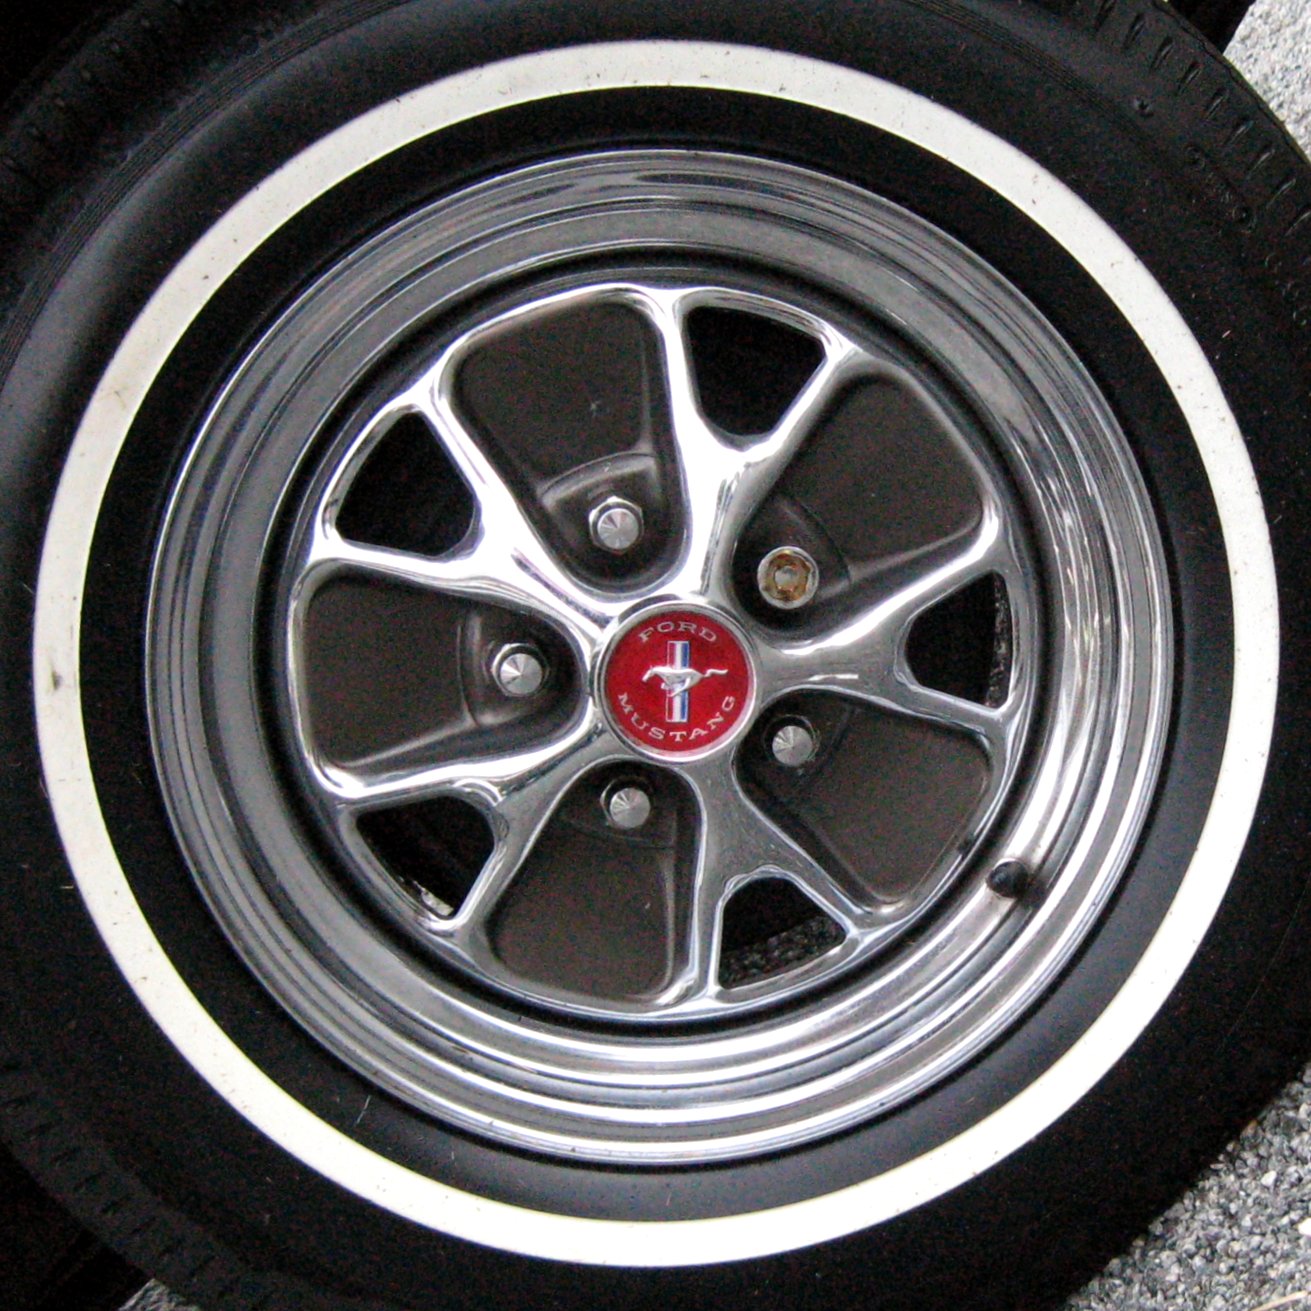 a wheel on a car with a red ke pad and a blue ke plate